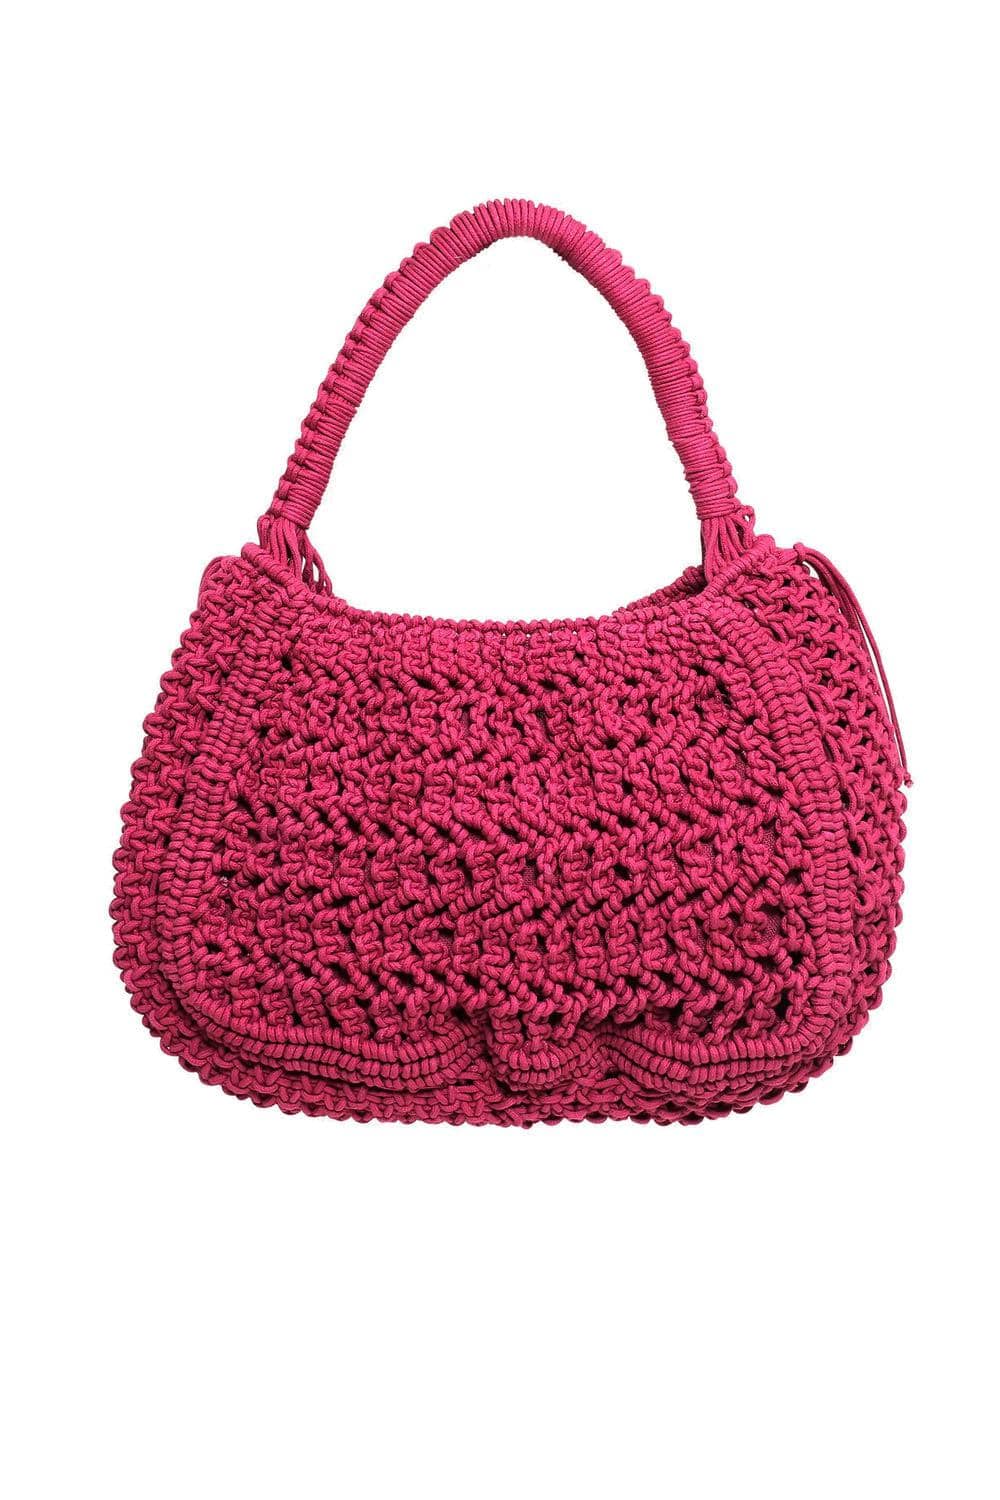 Olympic Net Handbag - Purple Match - offe market